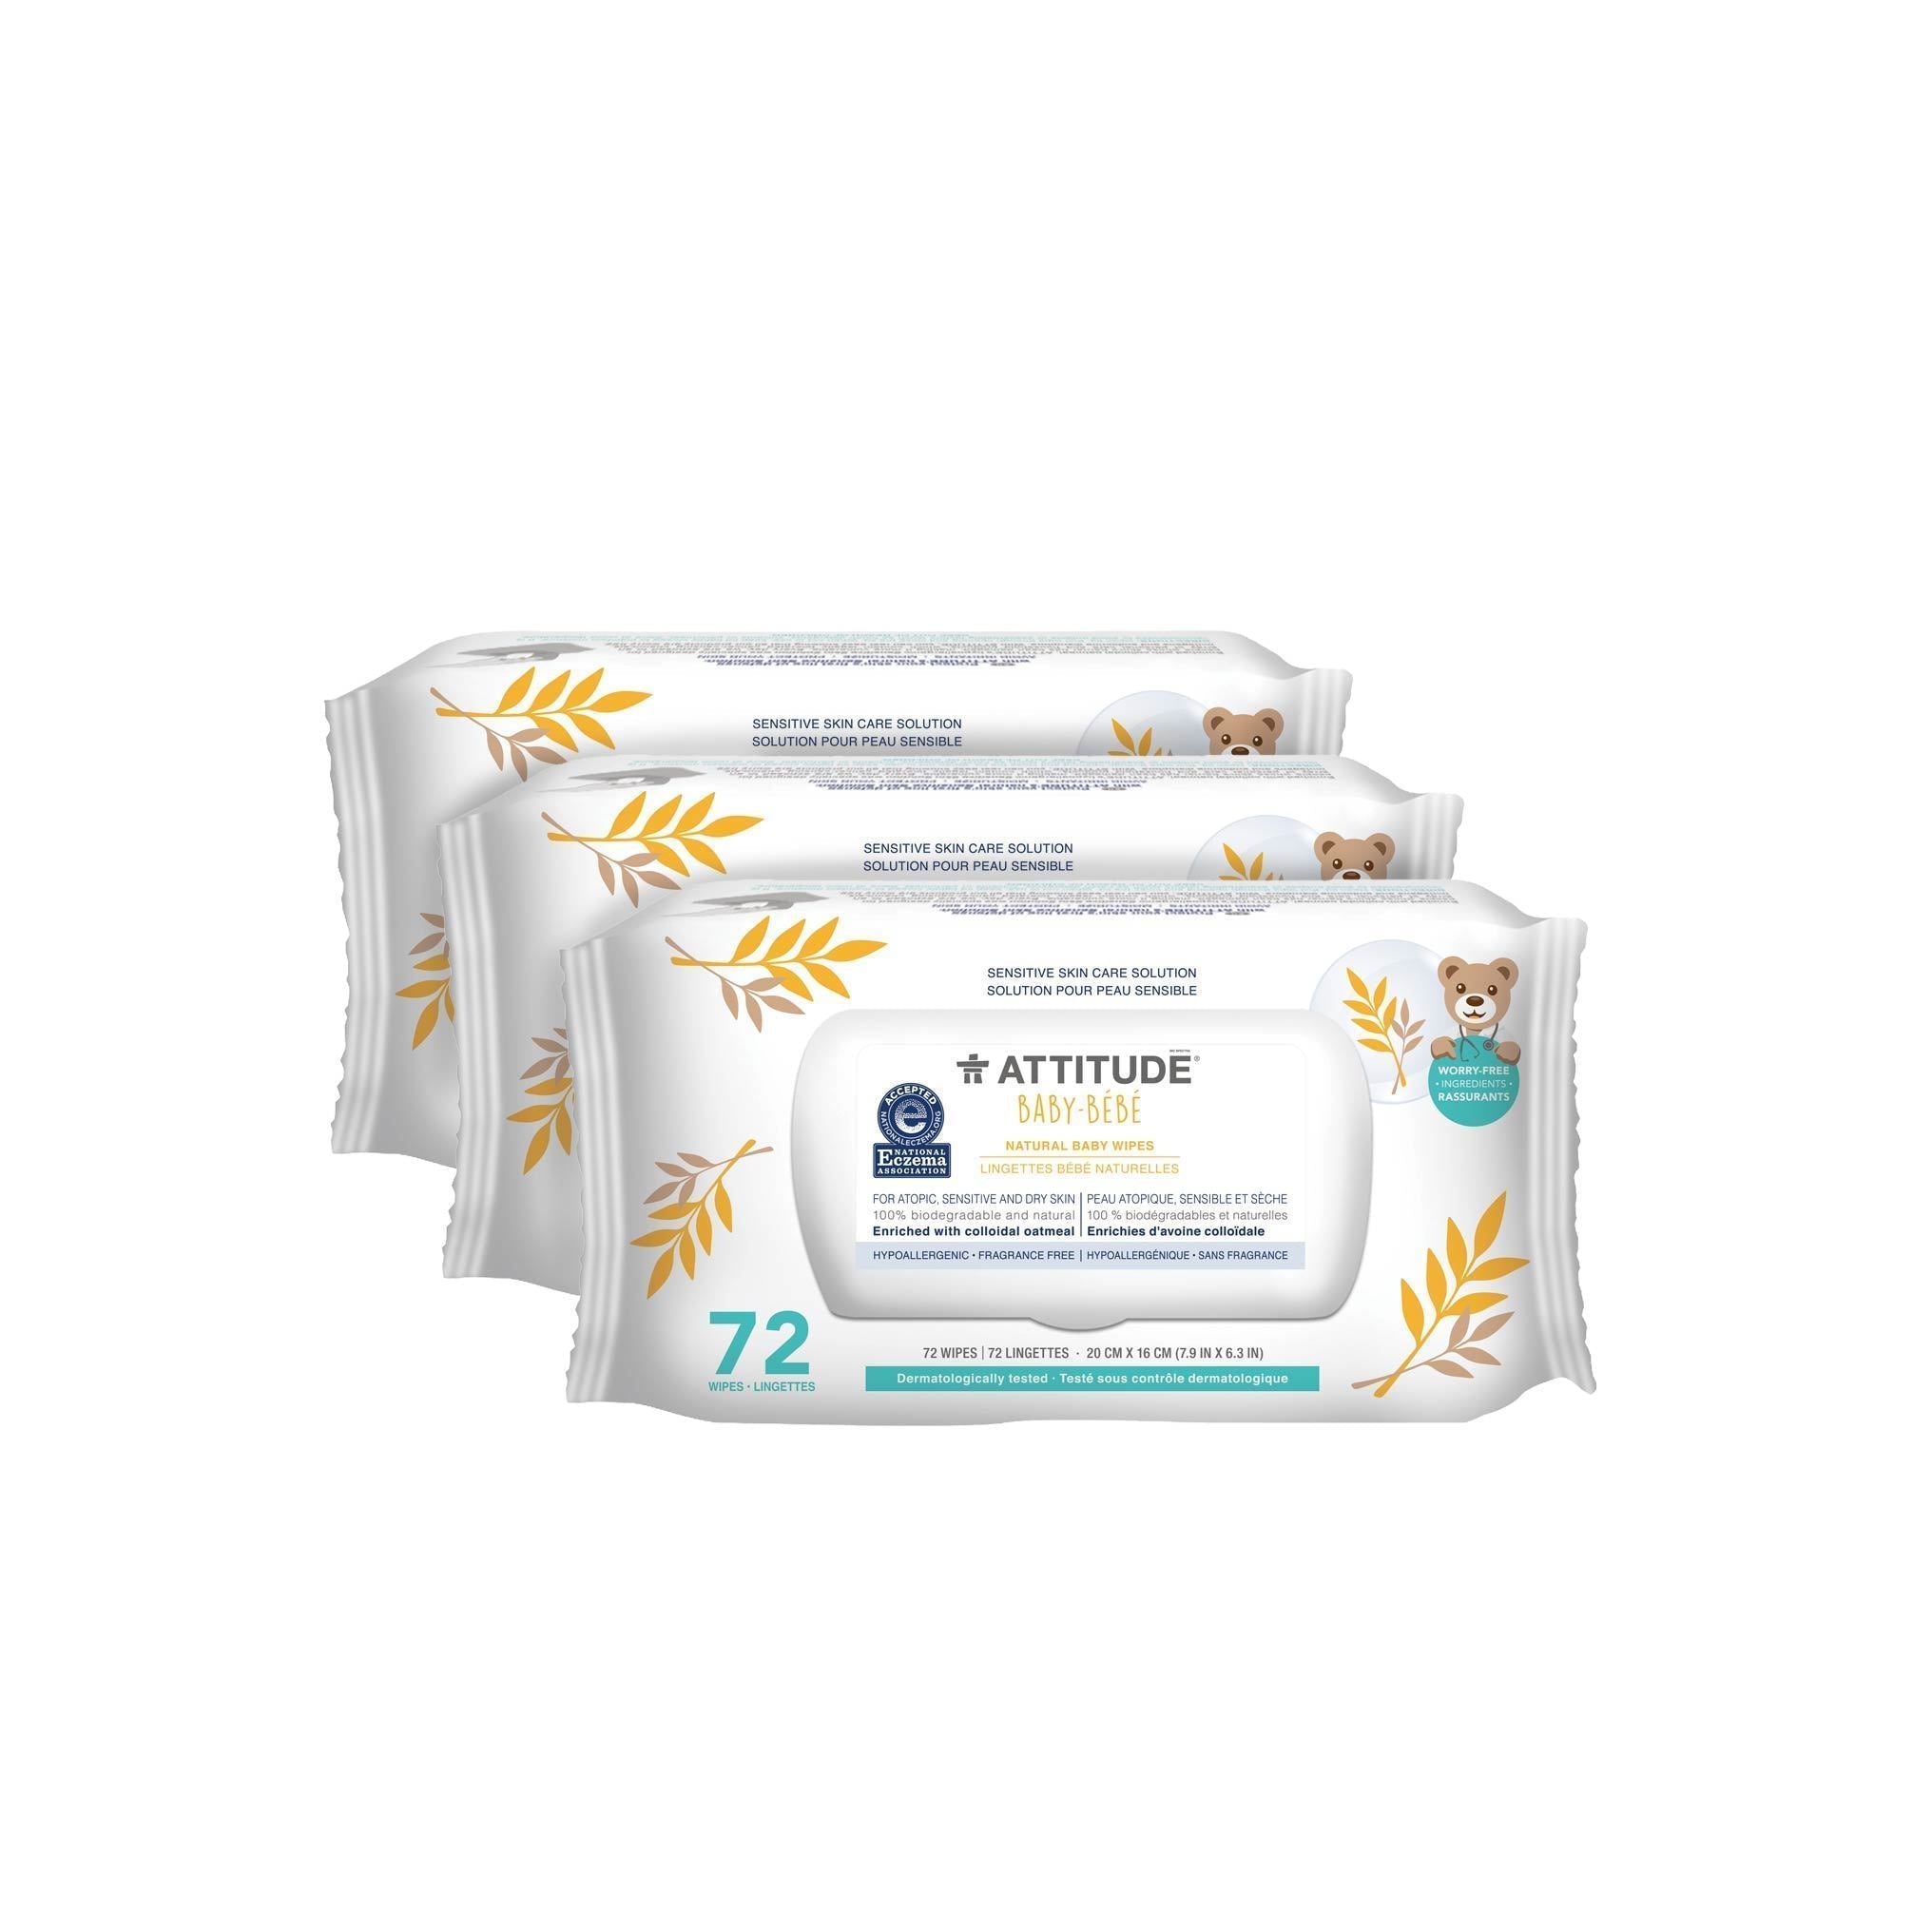 3 packs of 的态度 Baby Eczema Solution 婴儿湿巾 Enriched with oatmeal BDL_3_60700_en?_main? 3台(8折)